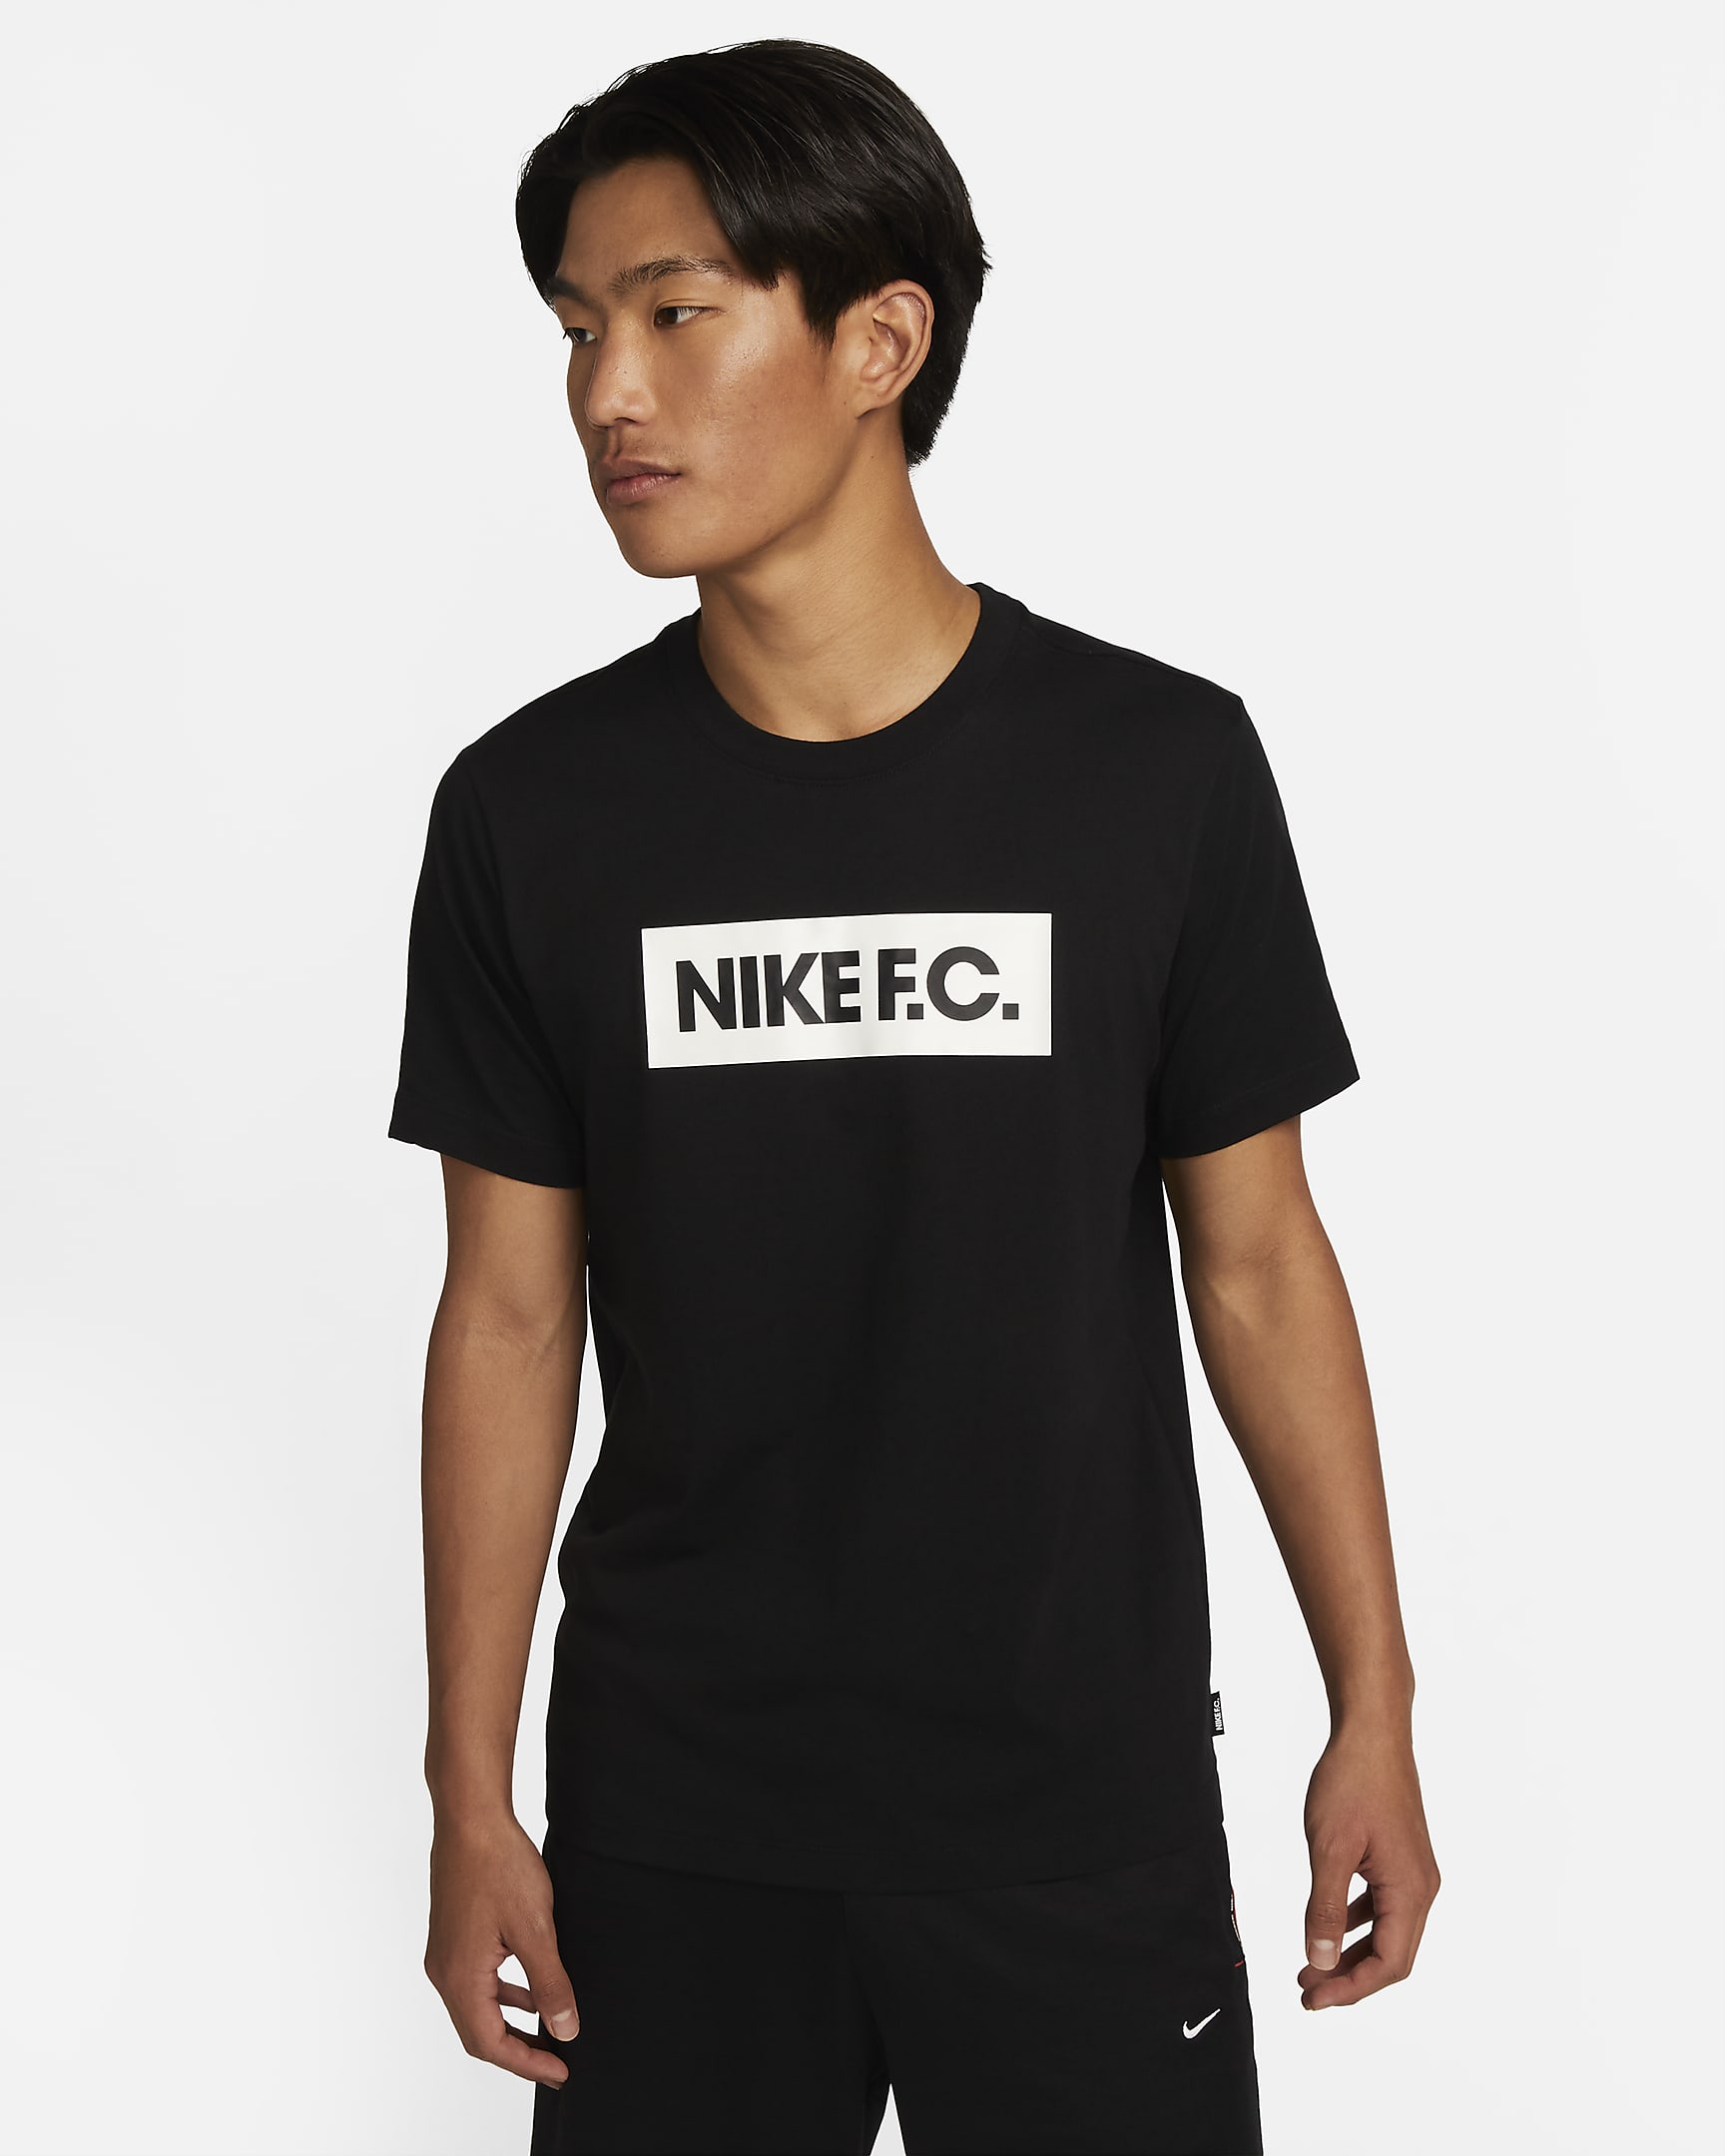 Nike F.C. Men's Football T-Shirt. Nike SG